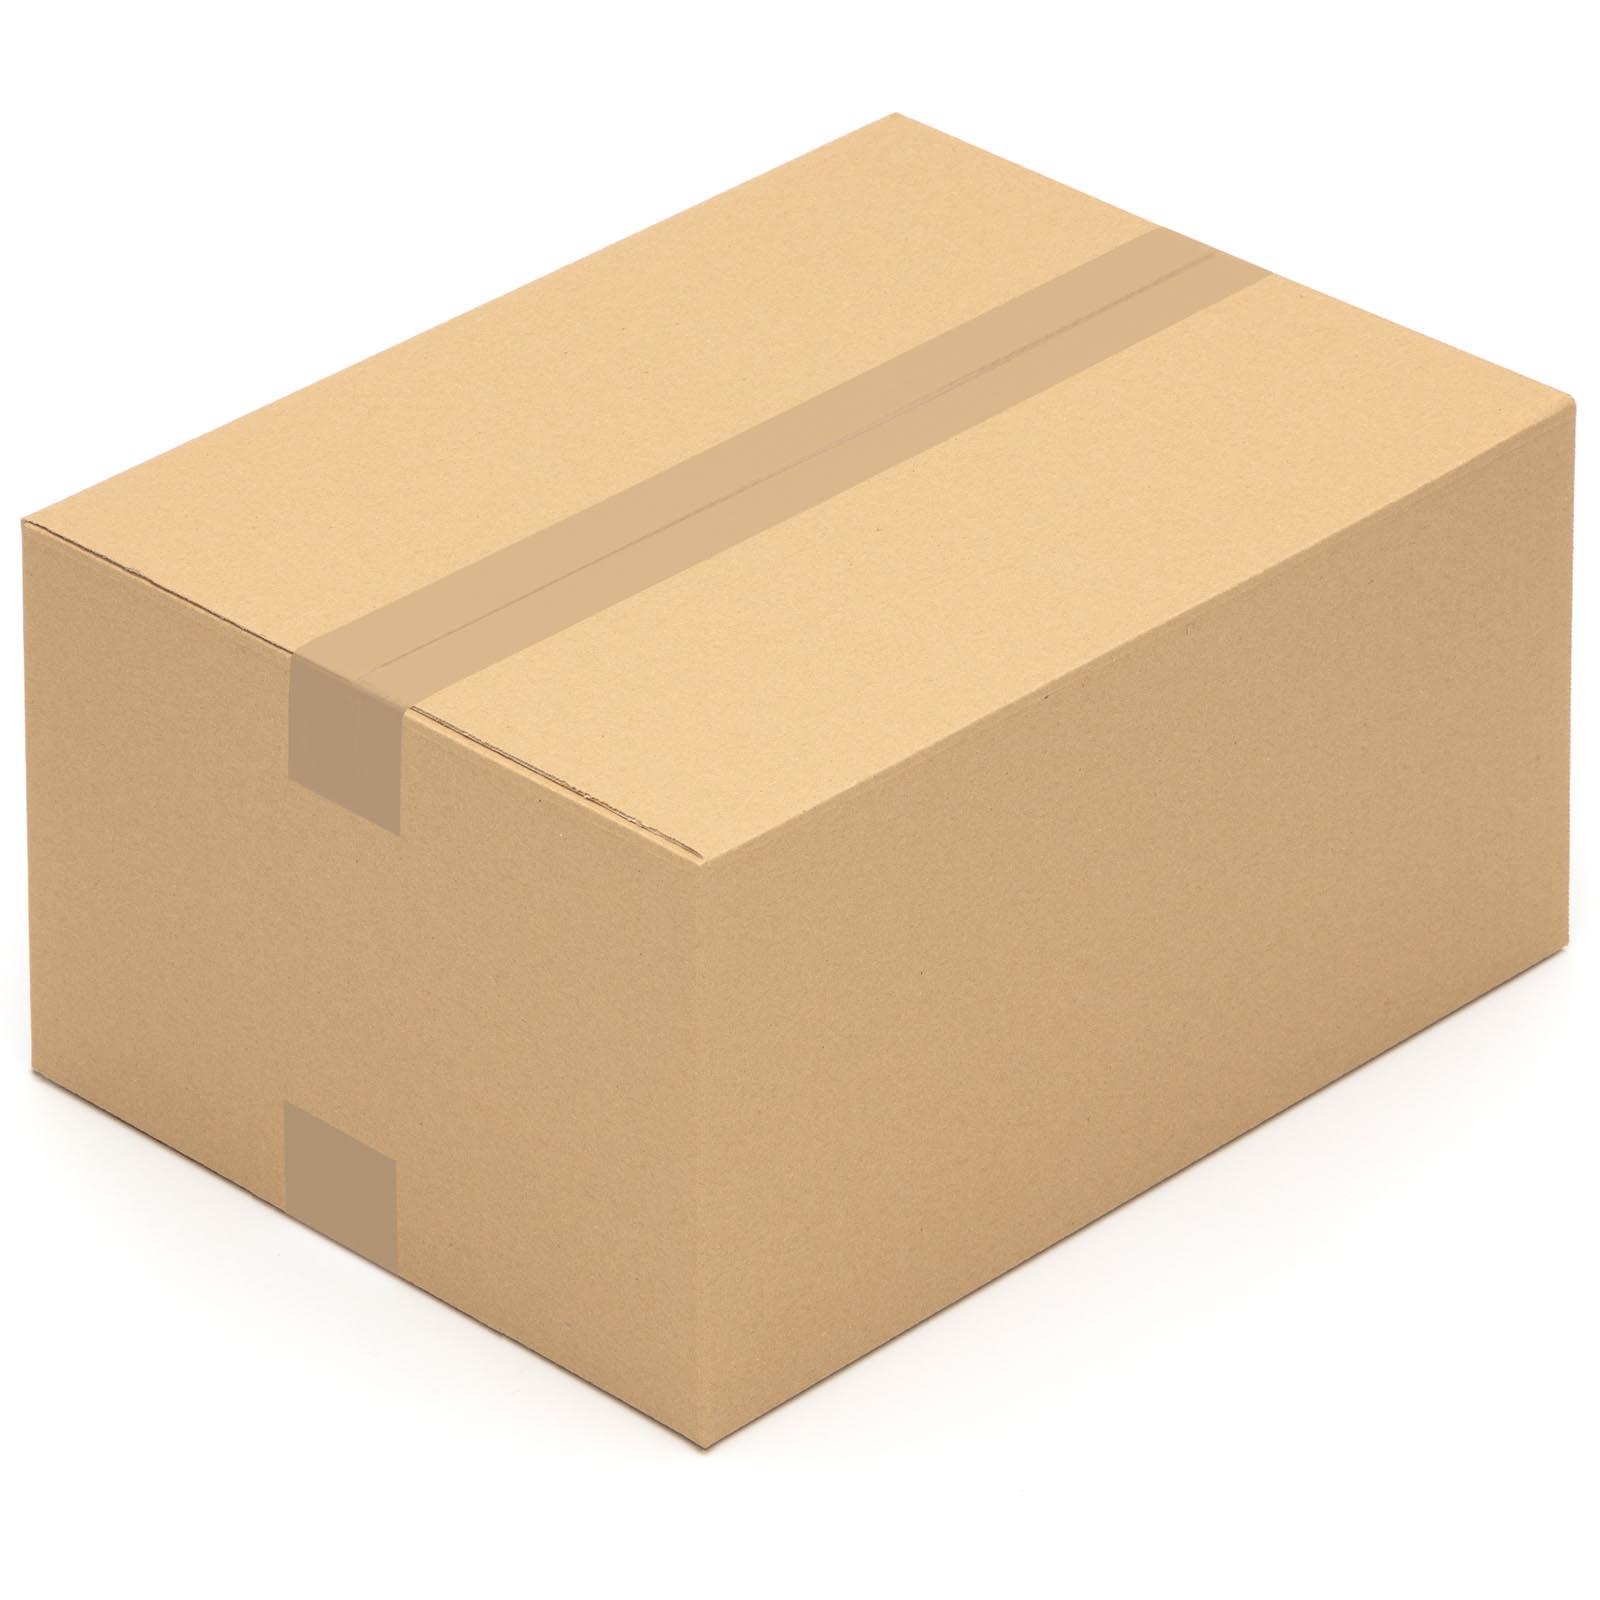 Faltkartons Versand Falt Kartons Verpackungen Kisten Box 400x300x200 mm KK-90 